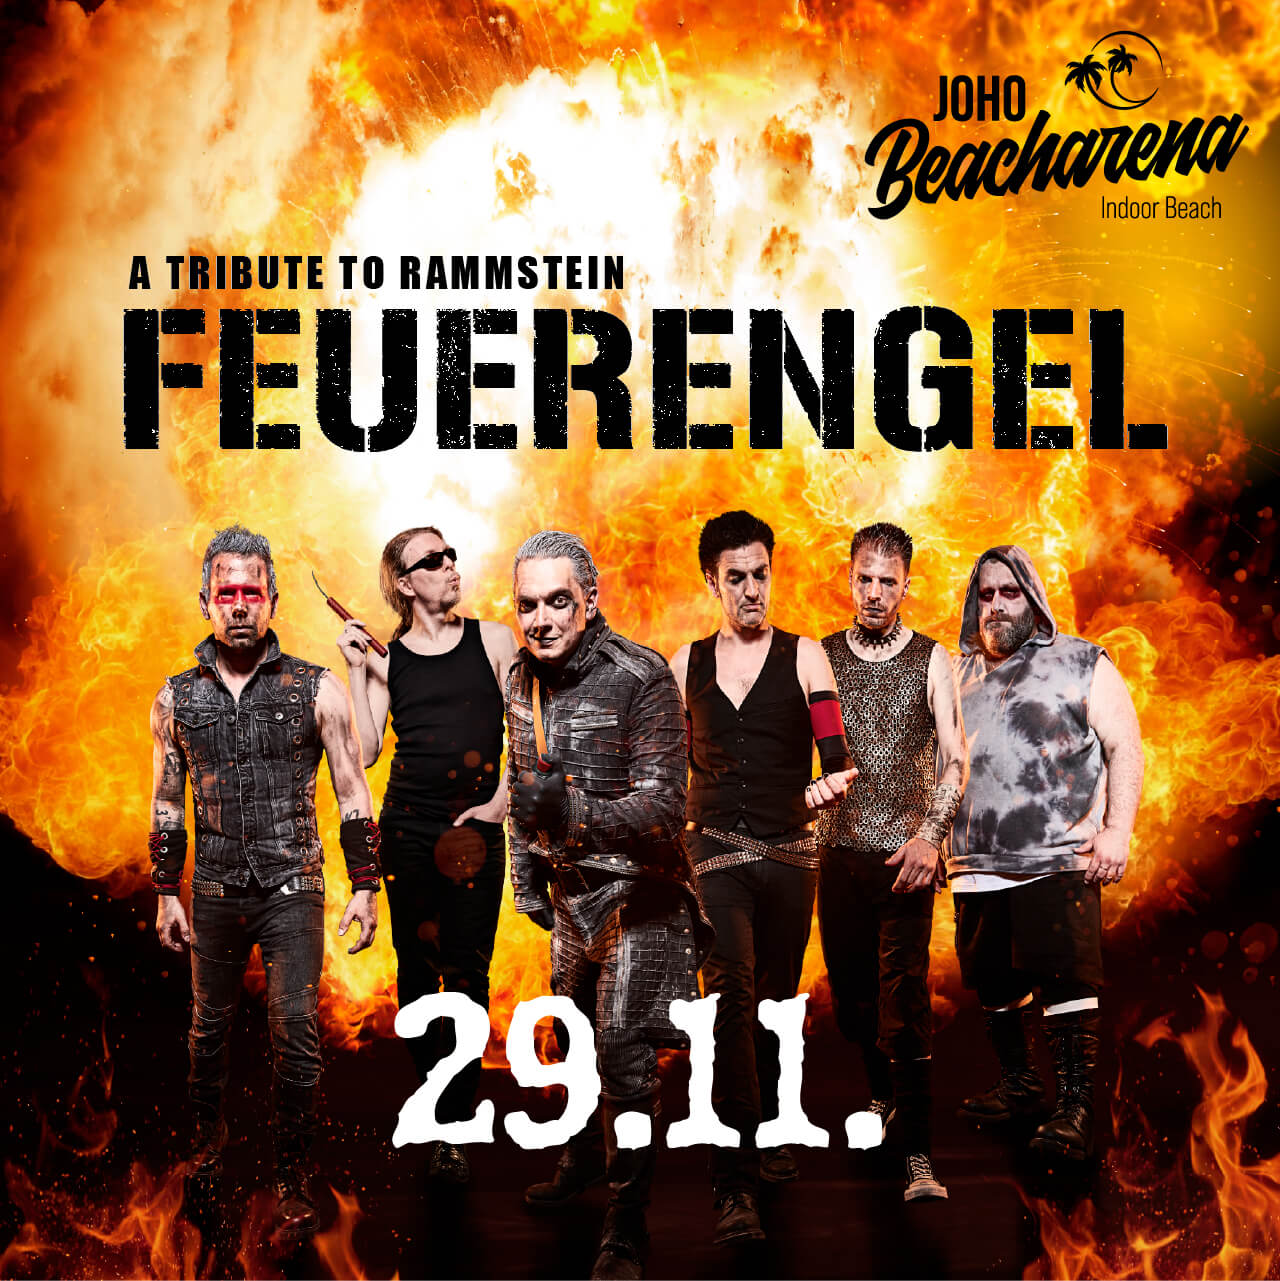 FEUERENGEL – a Tribute to Rammstein